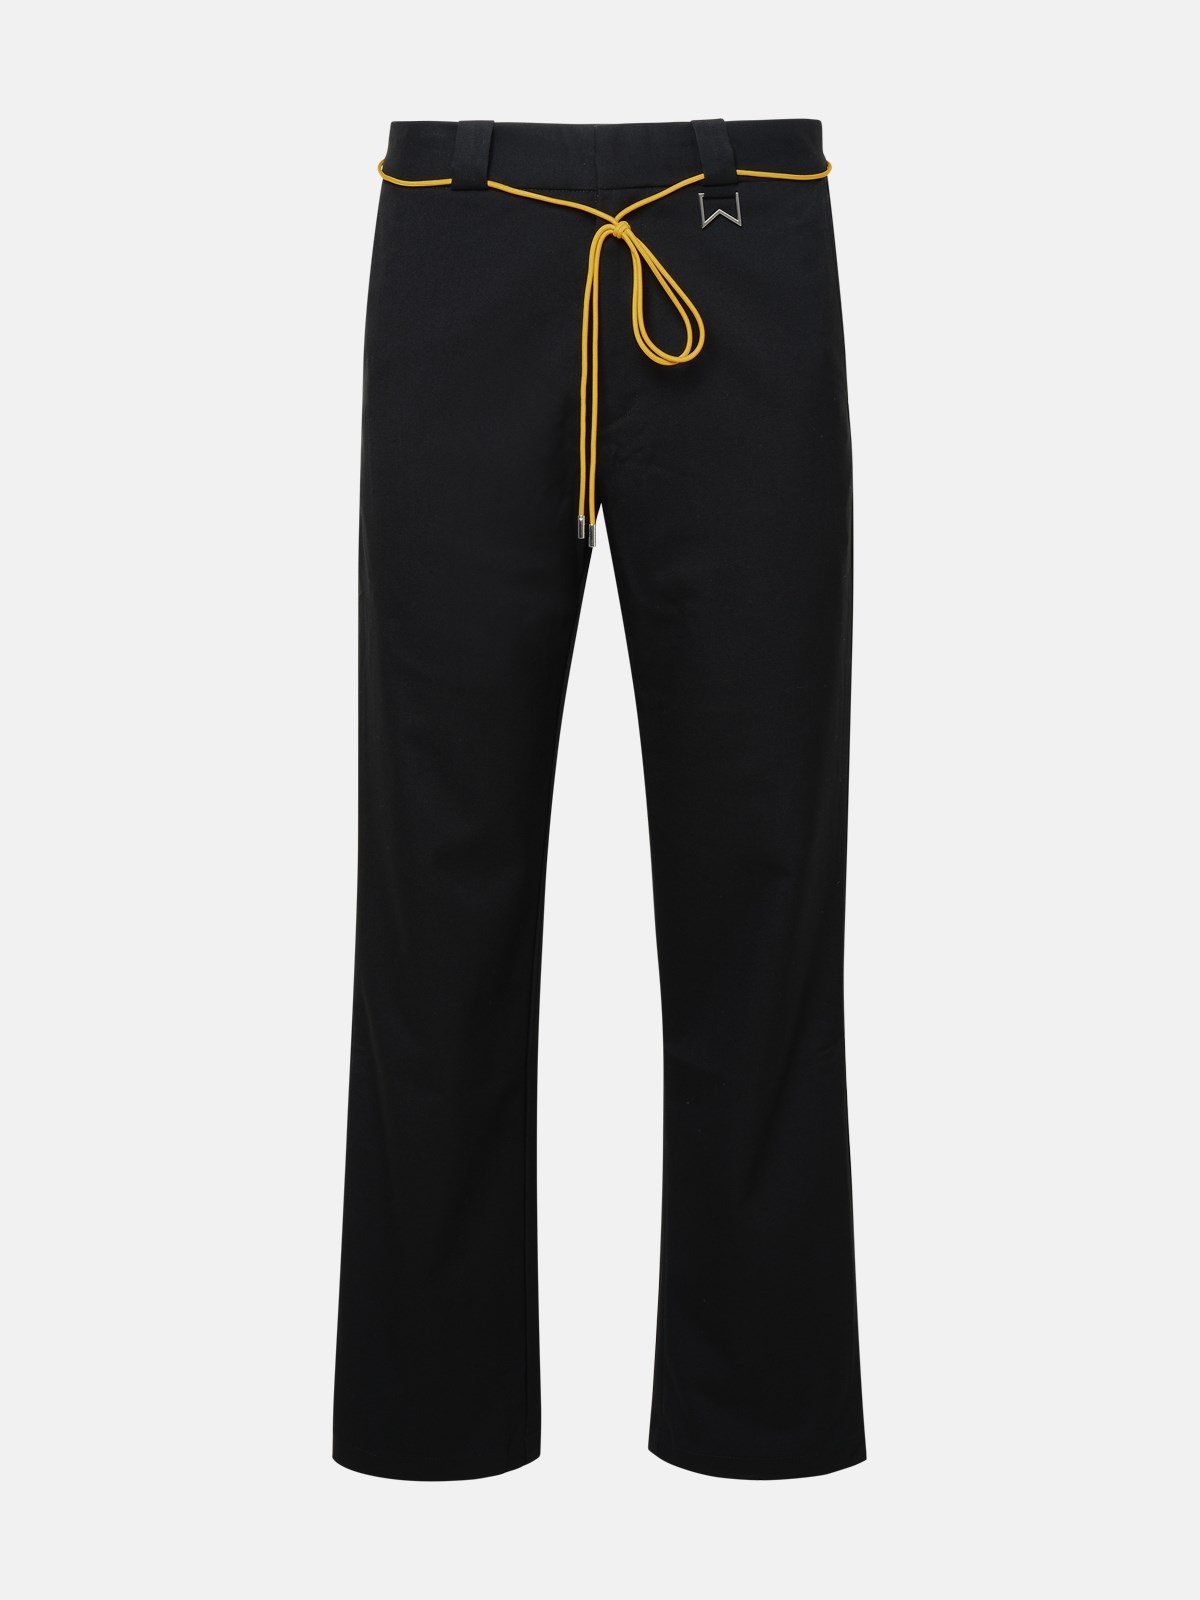 Rhude Black Polyester Pants